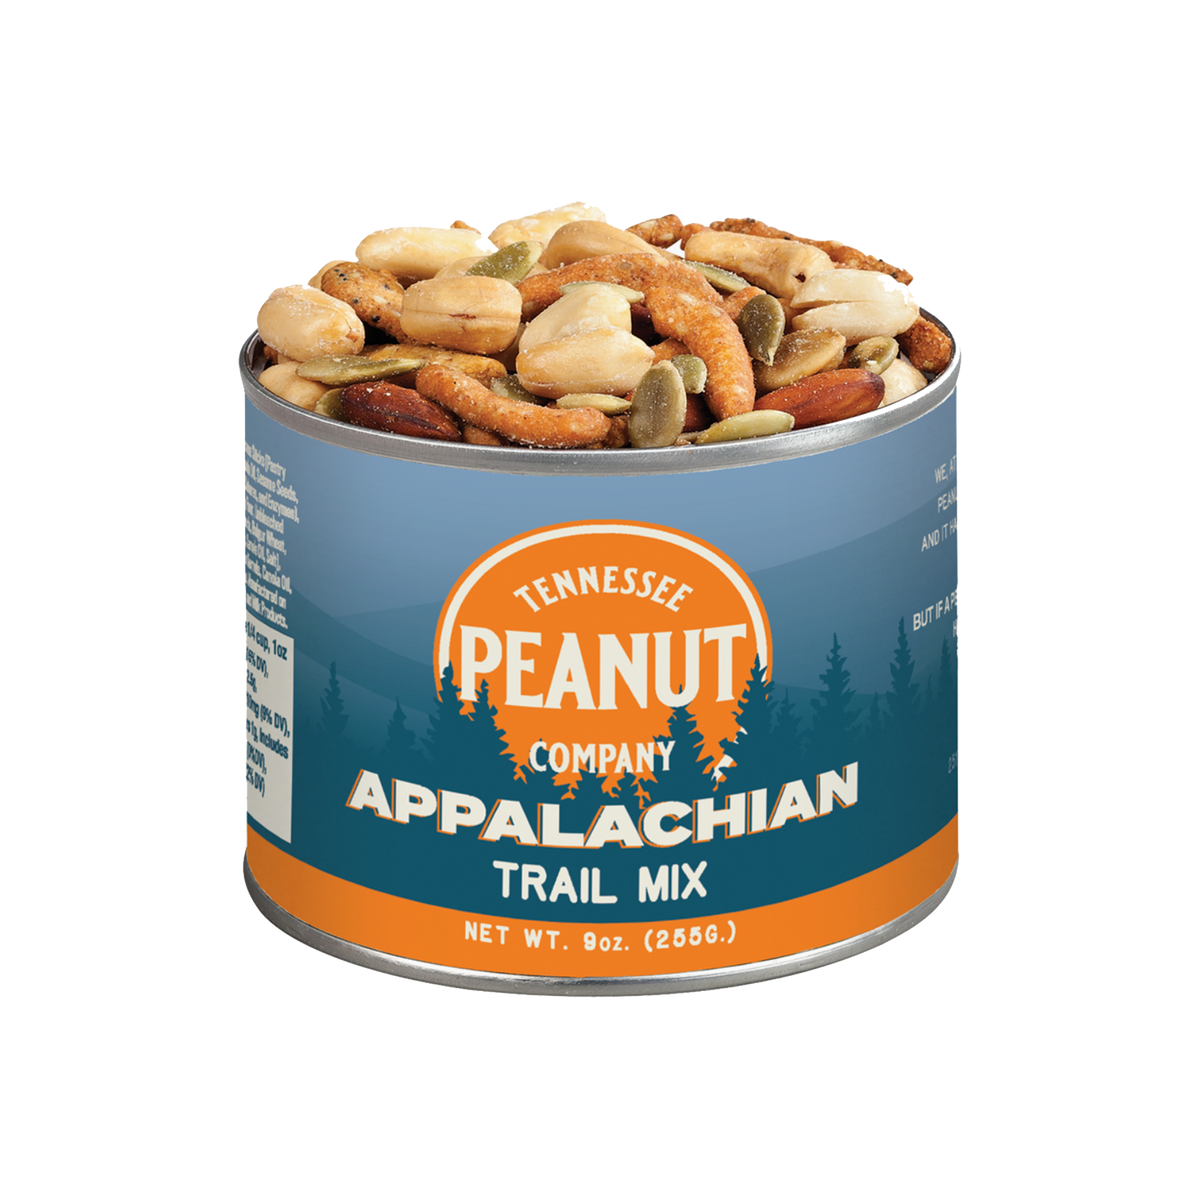 Morse kode disharmoni nedbrydes Appalachian Trail Mix – Tennessee Peanut Company